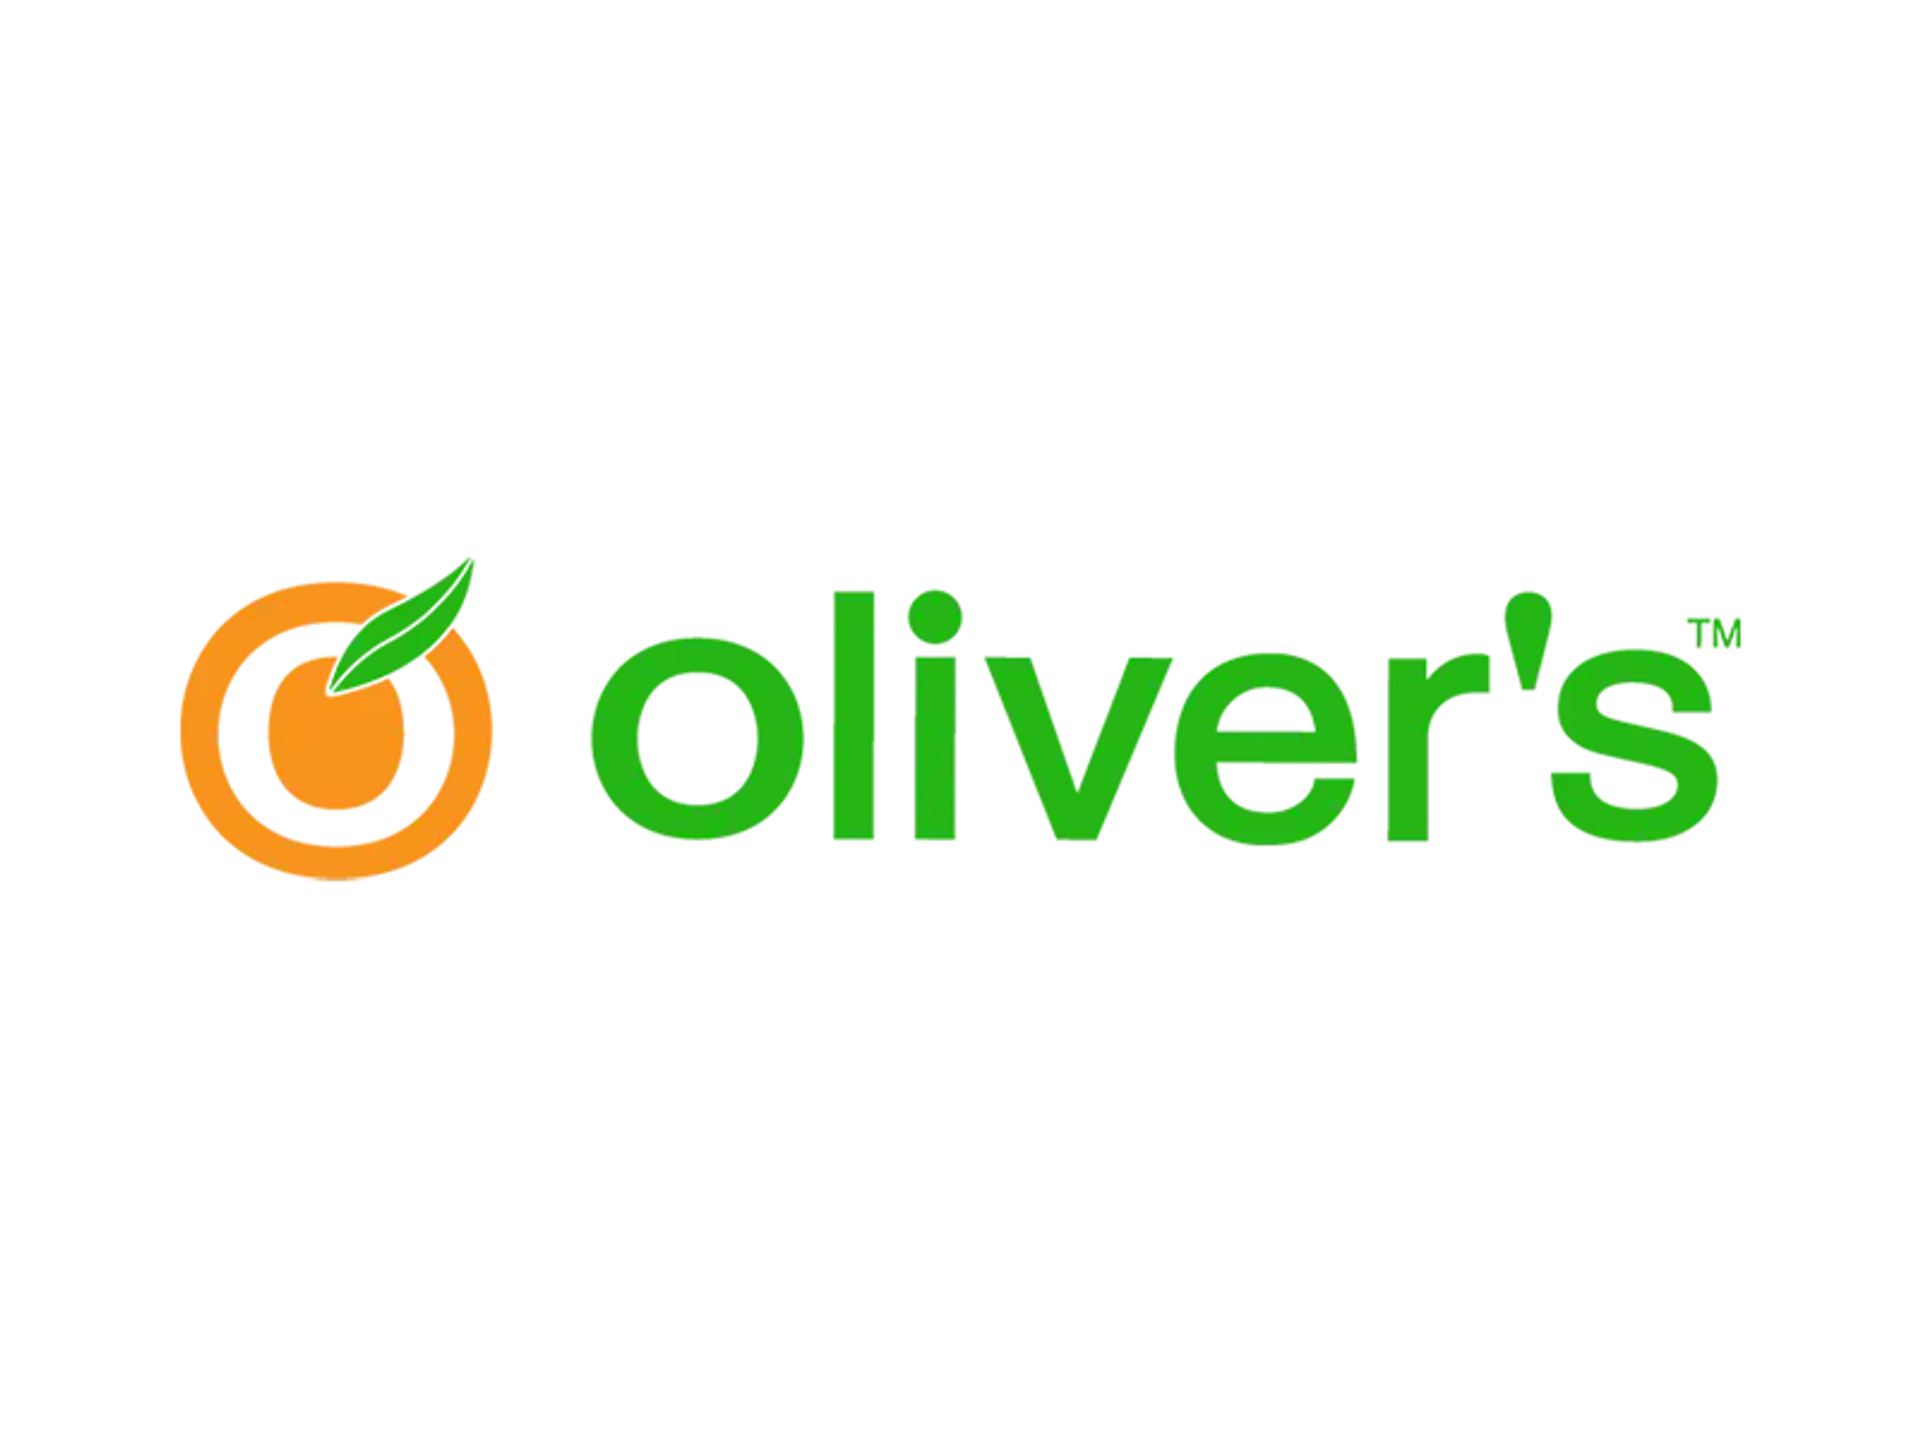 Olivers logo